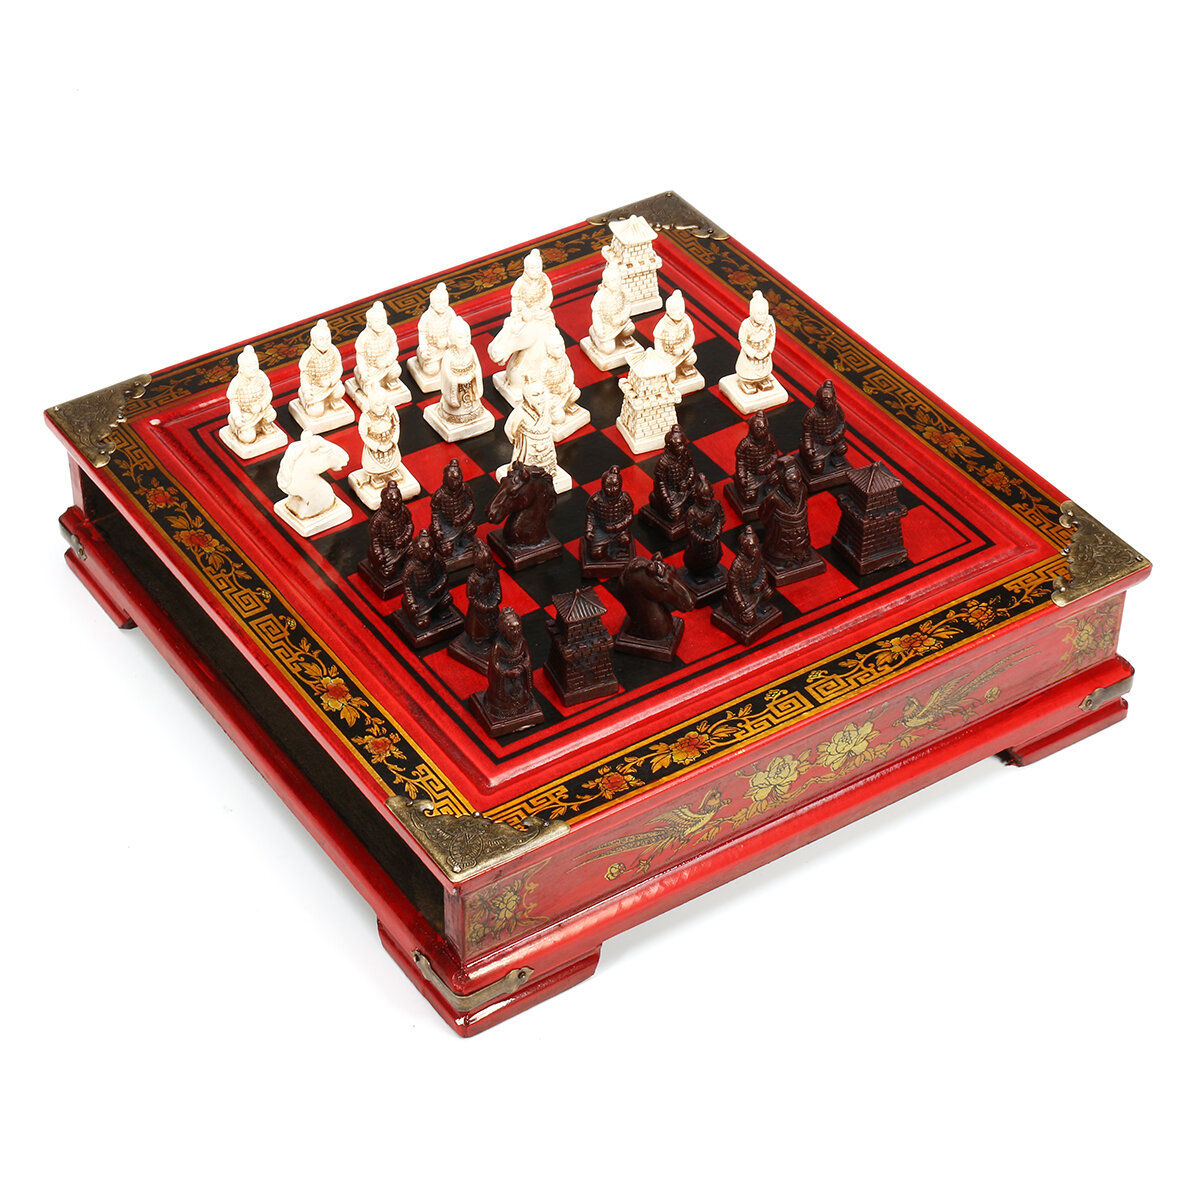 toy chess set